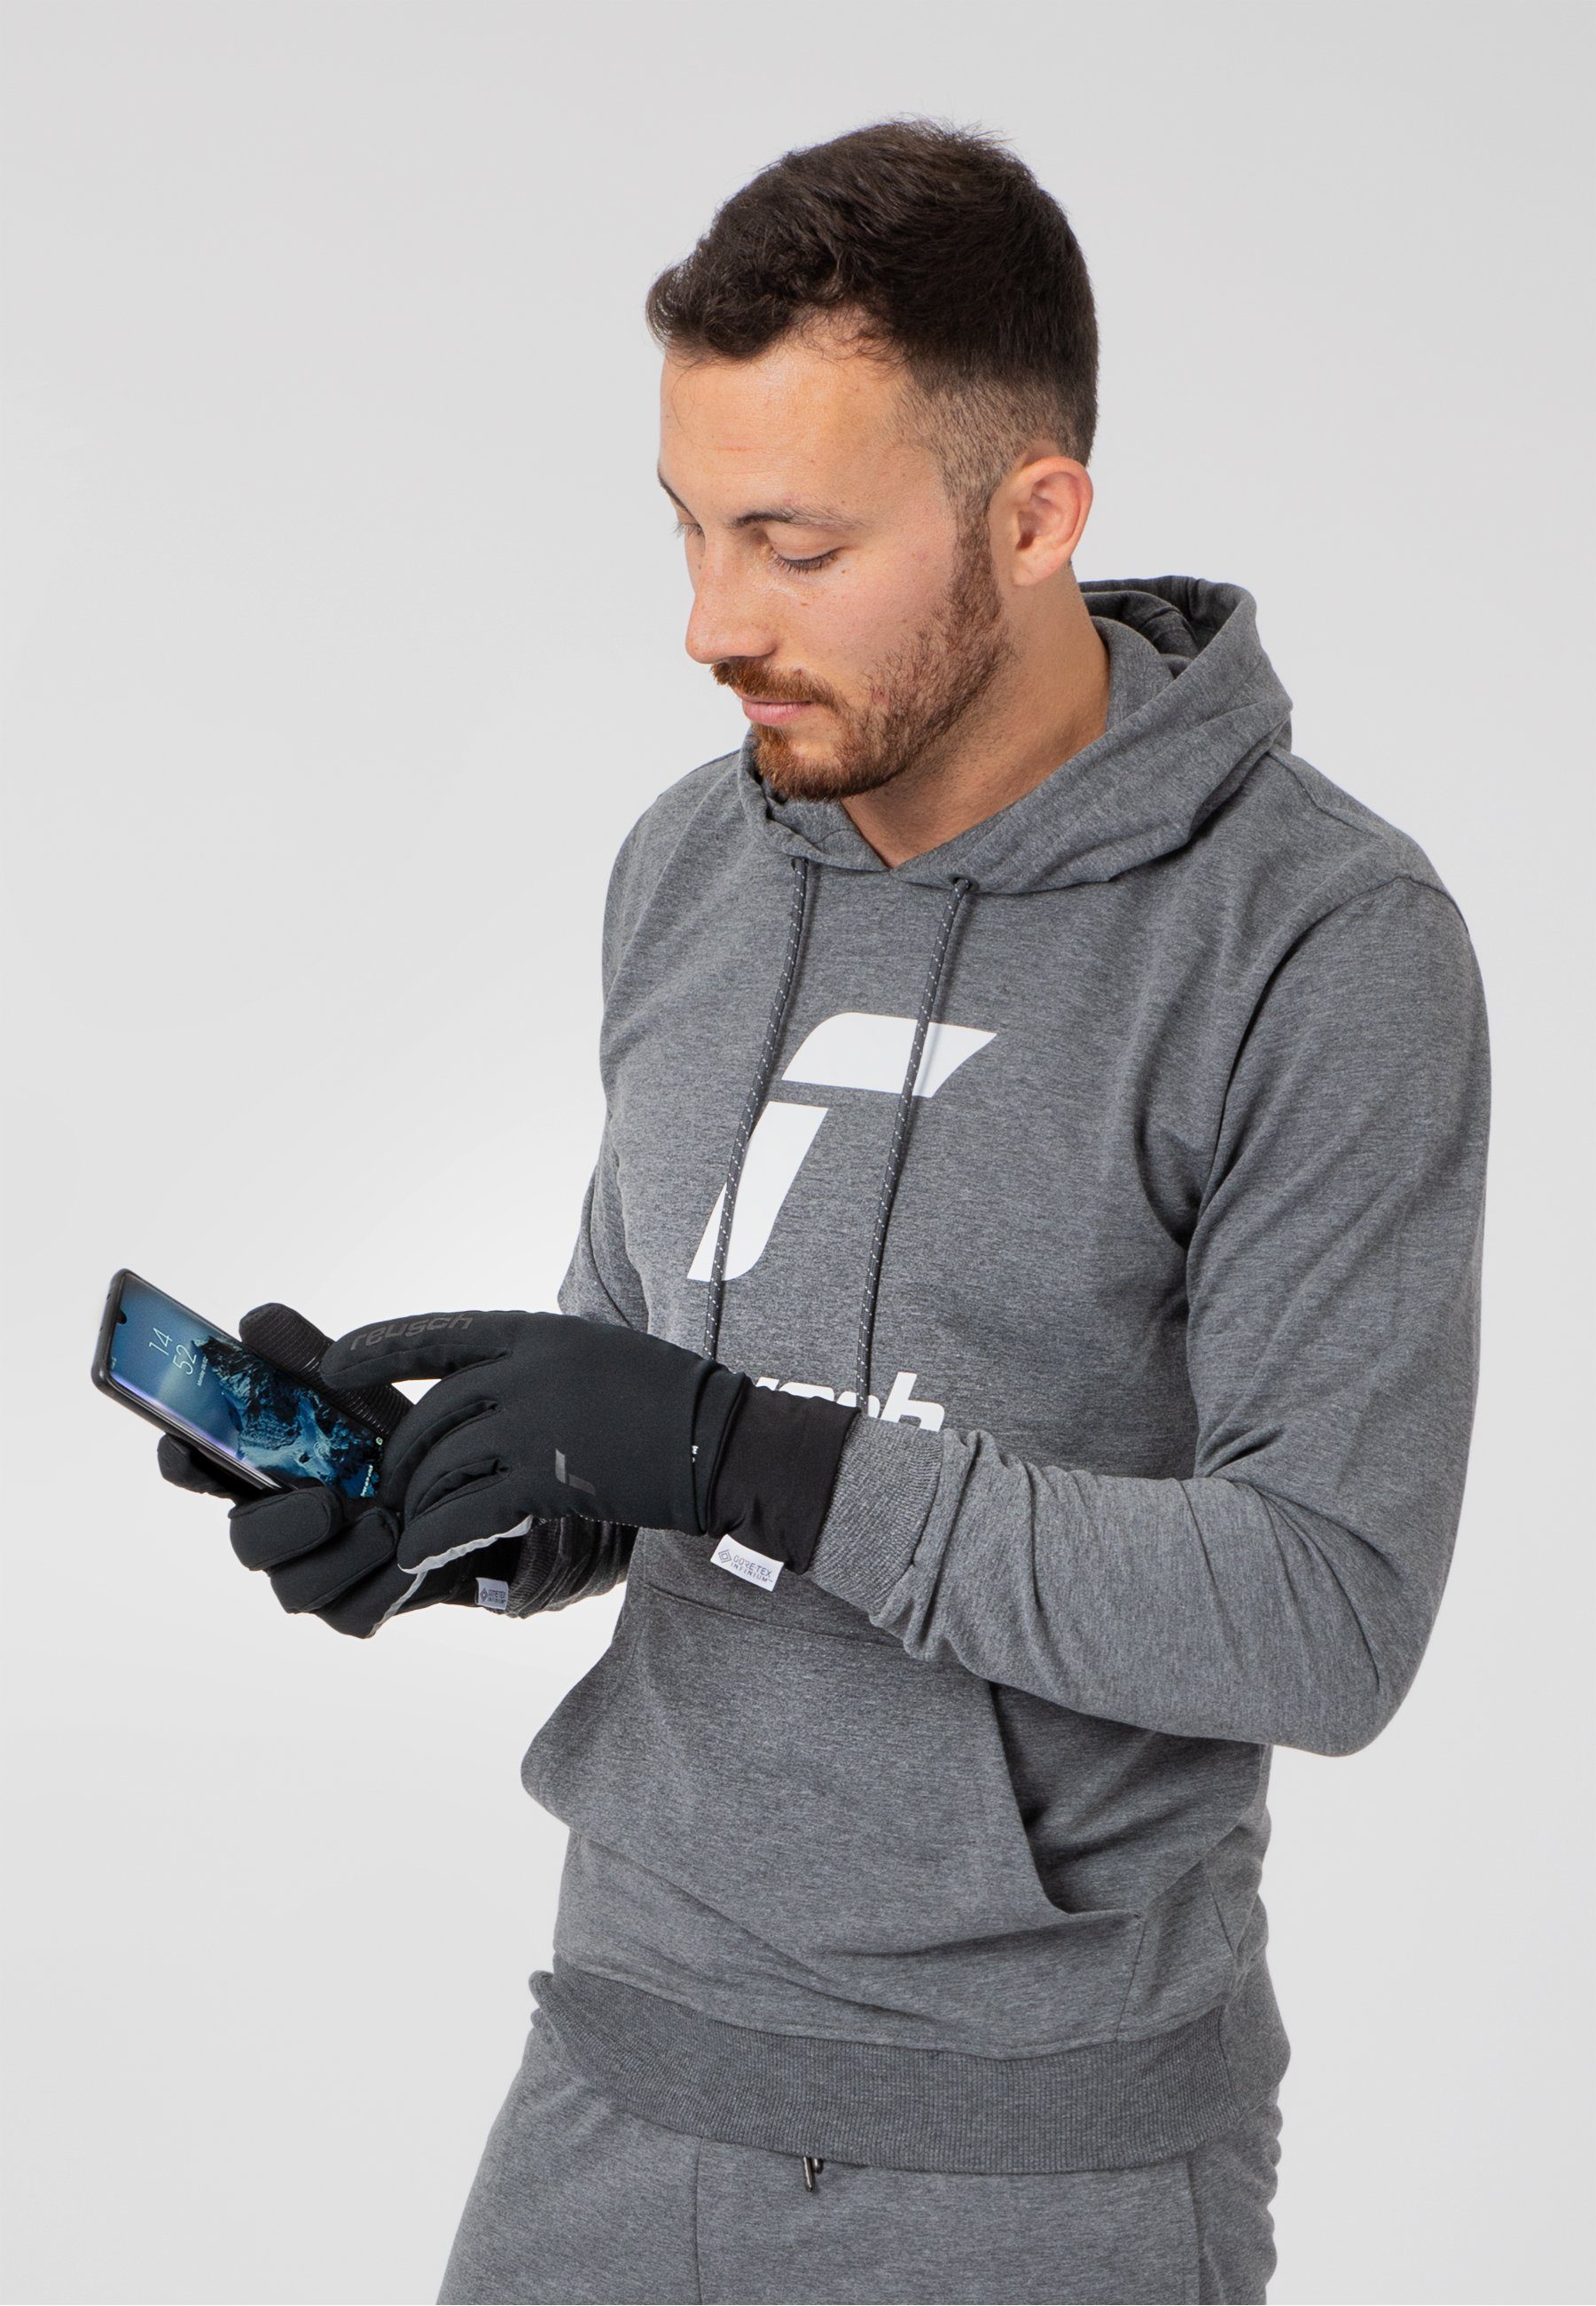 GORE-TEX Glove Touchscreen-Funktion Reusch INFINIUM mit Laufhandschuhe Multisport